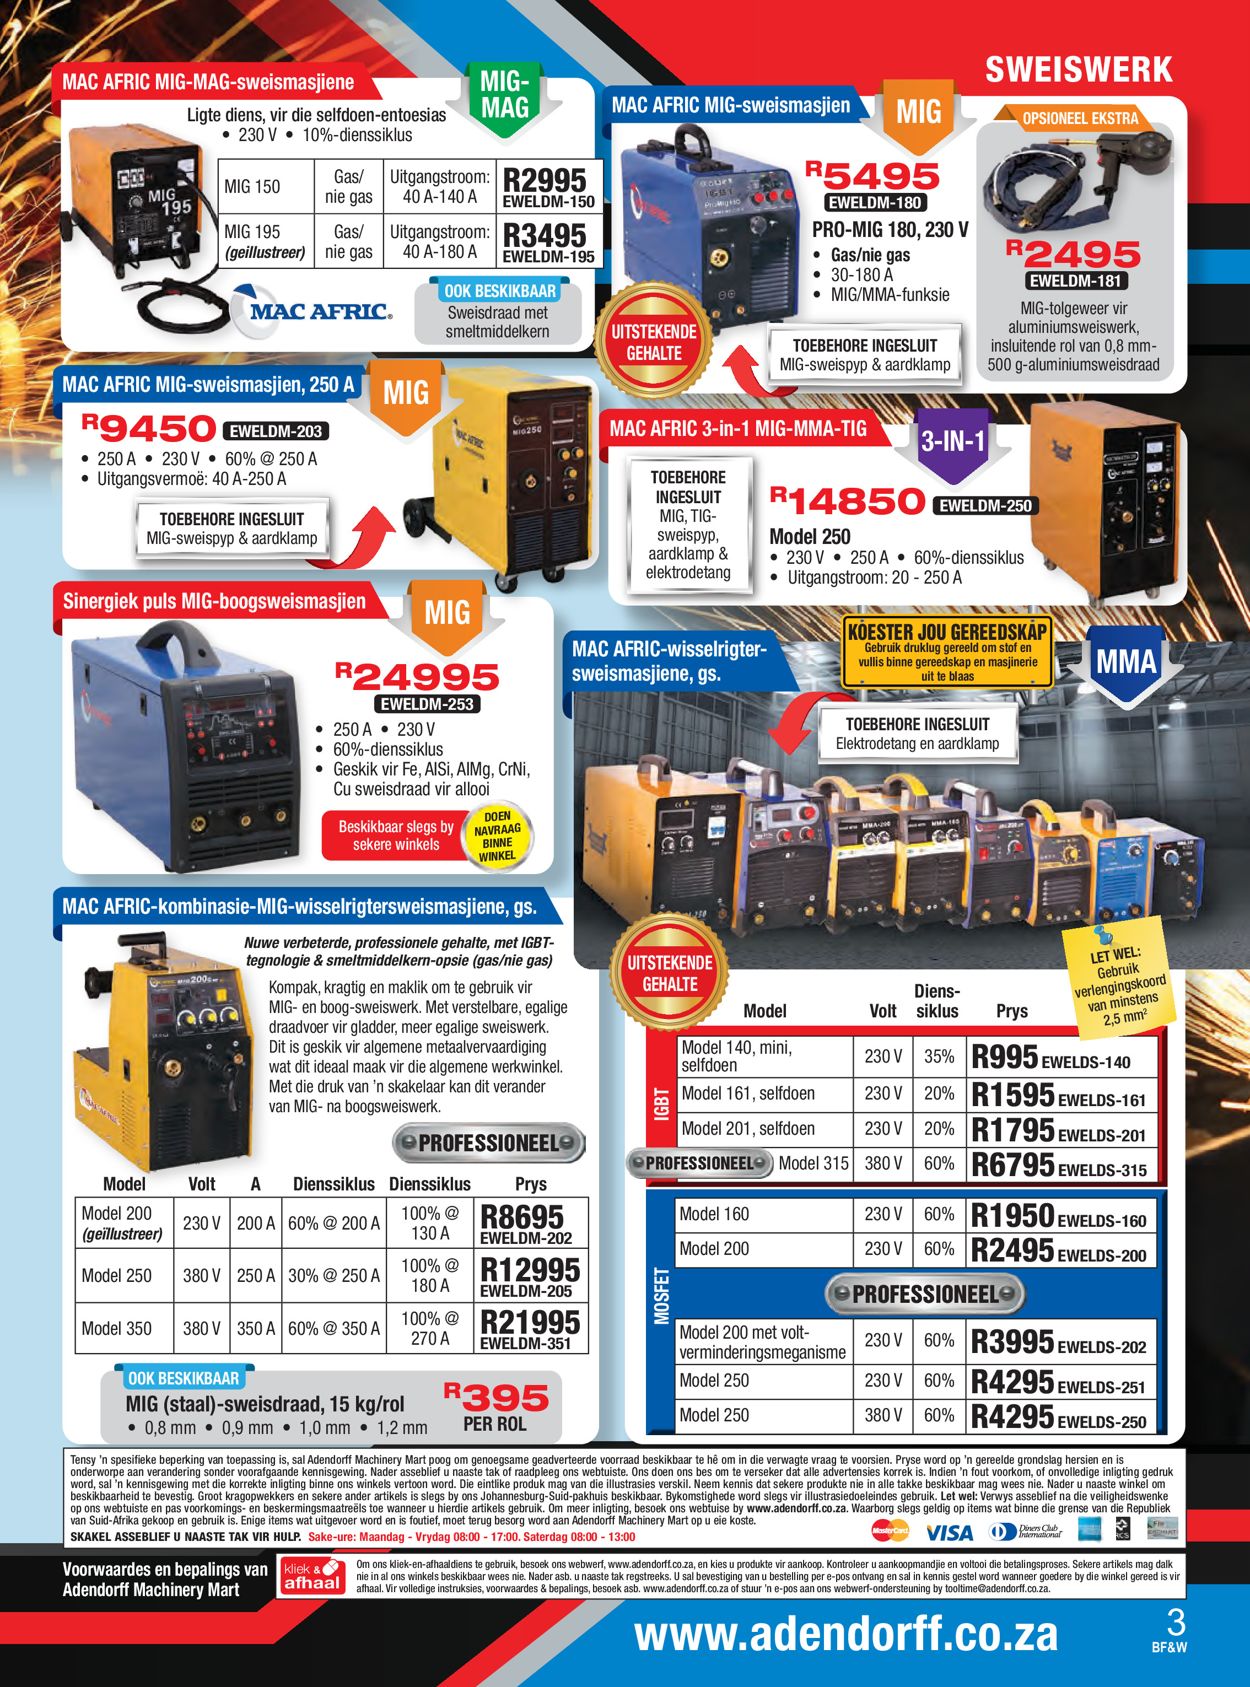 Adendorff Machinery Mart Catalogue - 2020/02/01-2020/07/01 (Page 3)